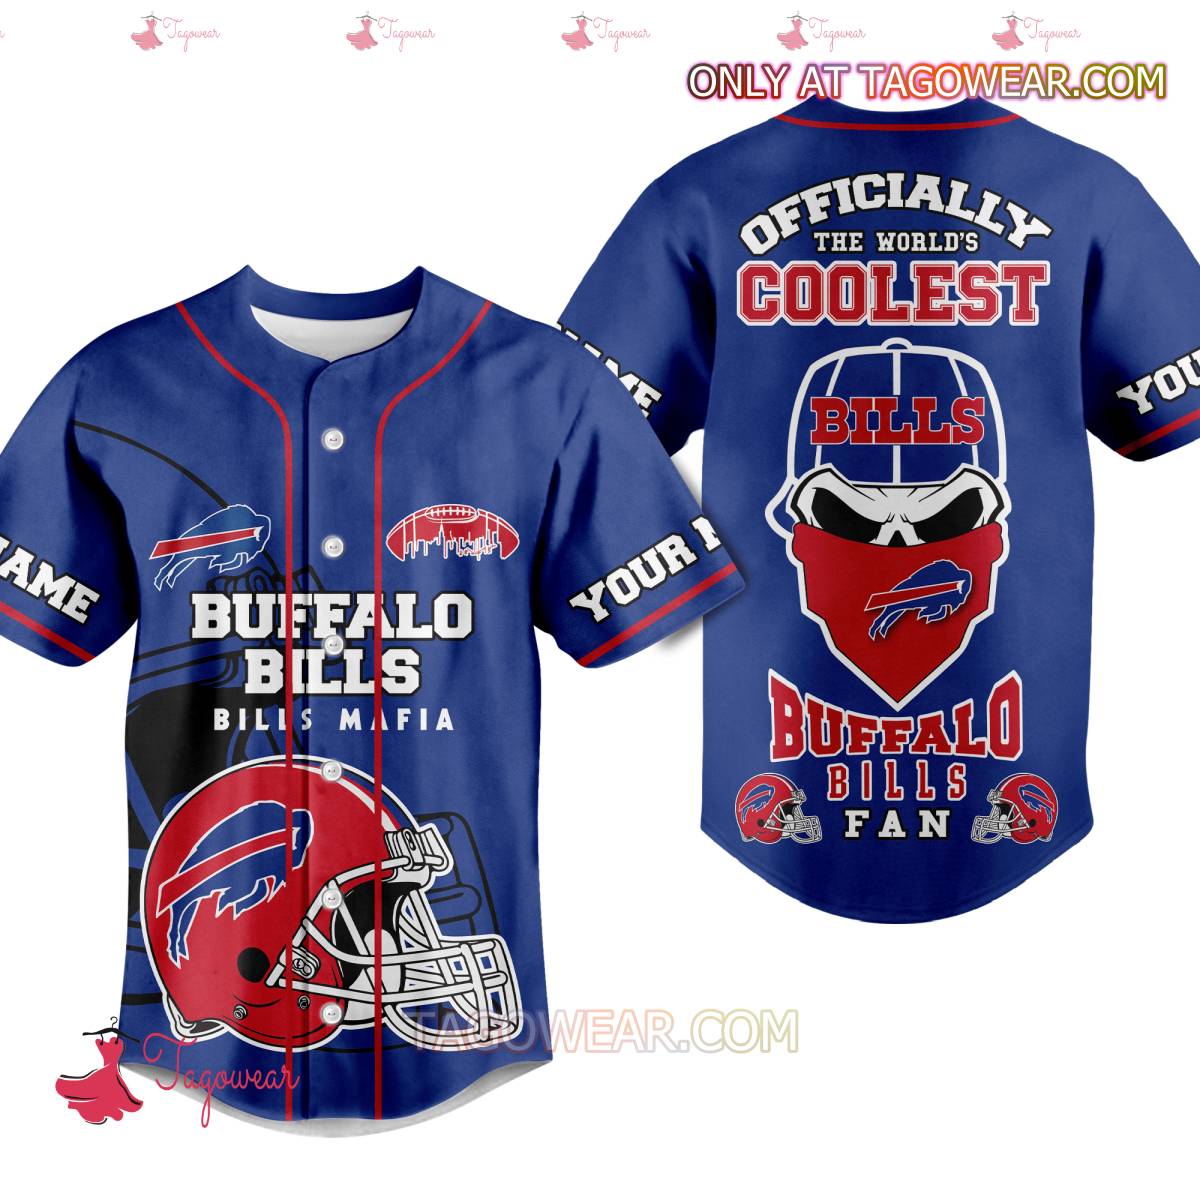 Buffalo Bills Officially The World's Coolest Personalized Baseball Jersey